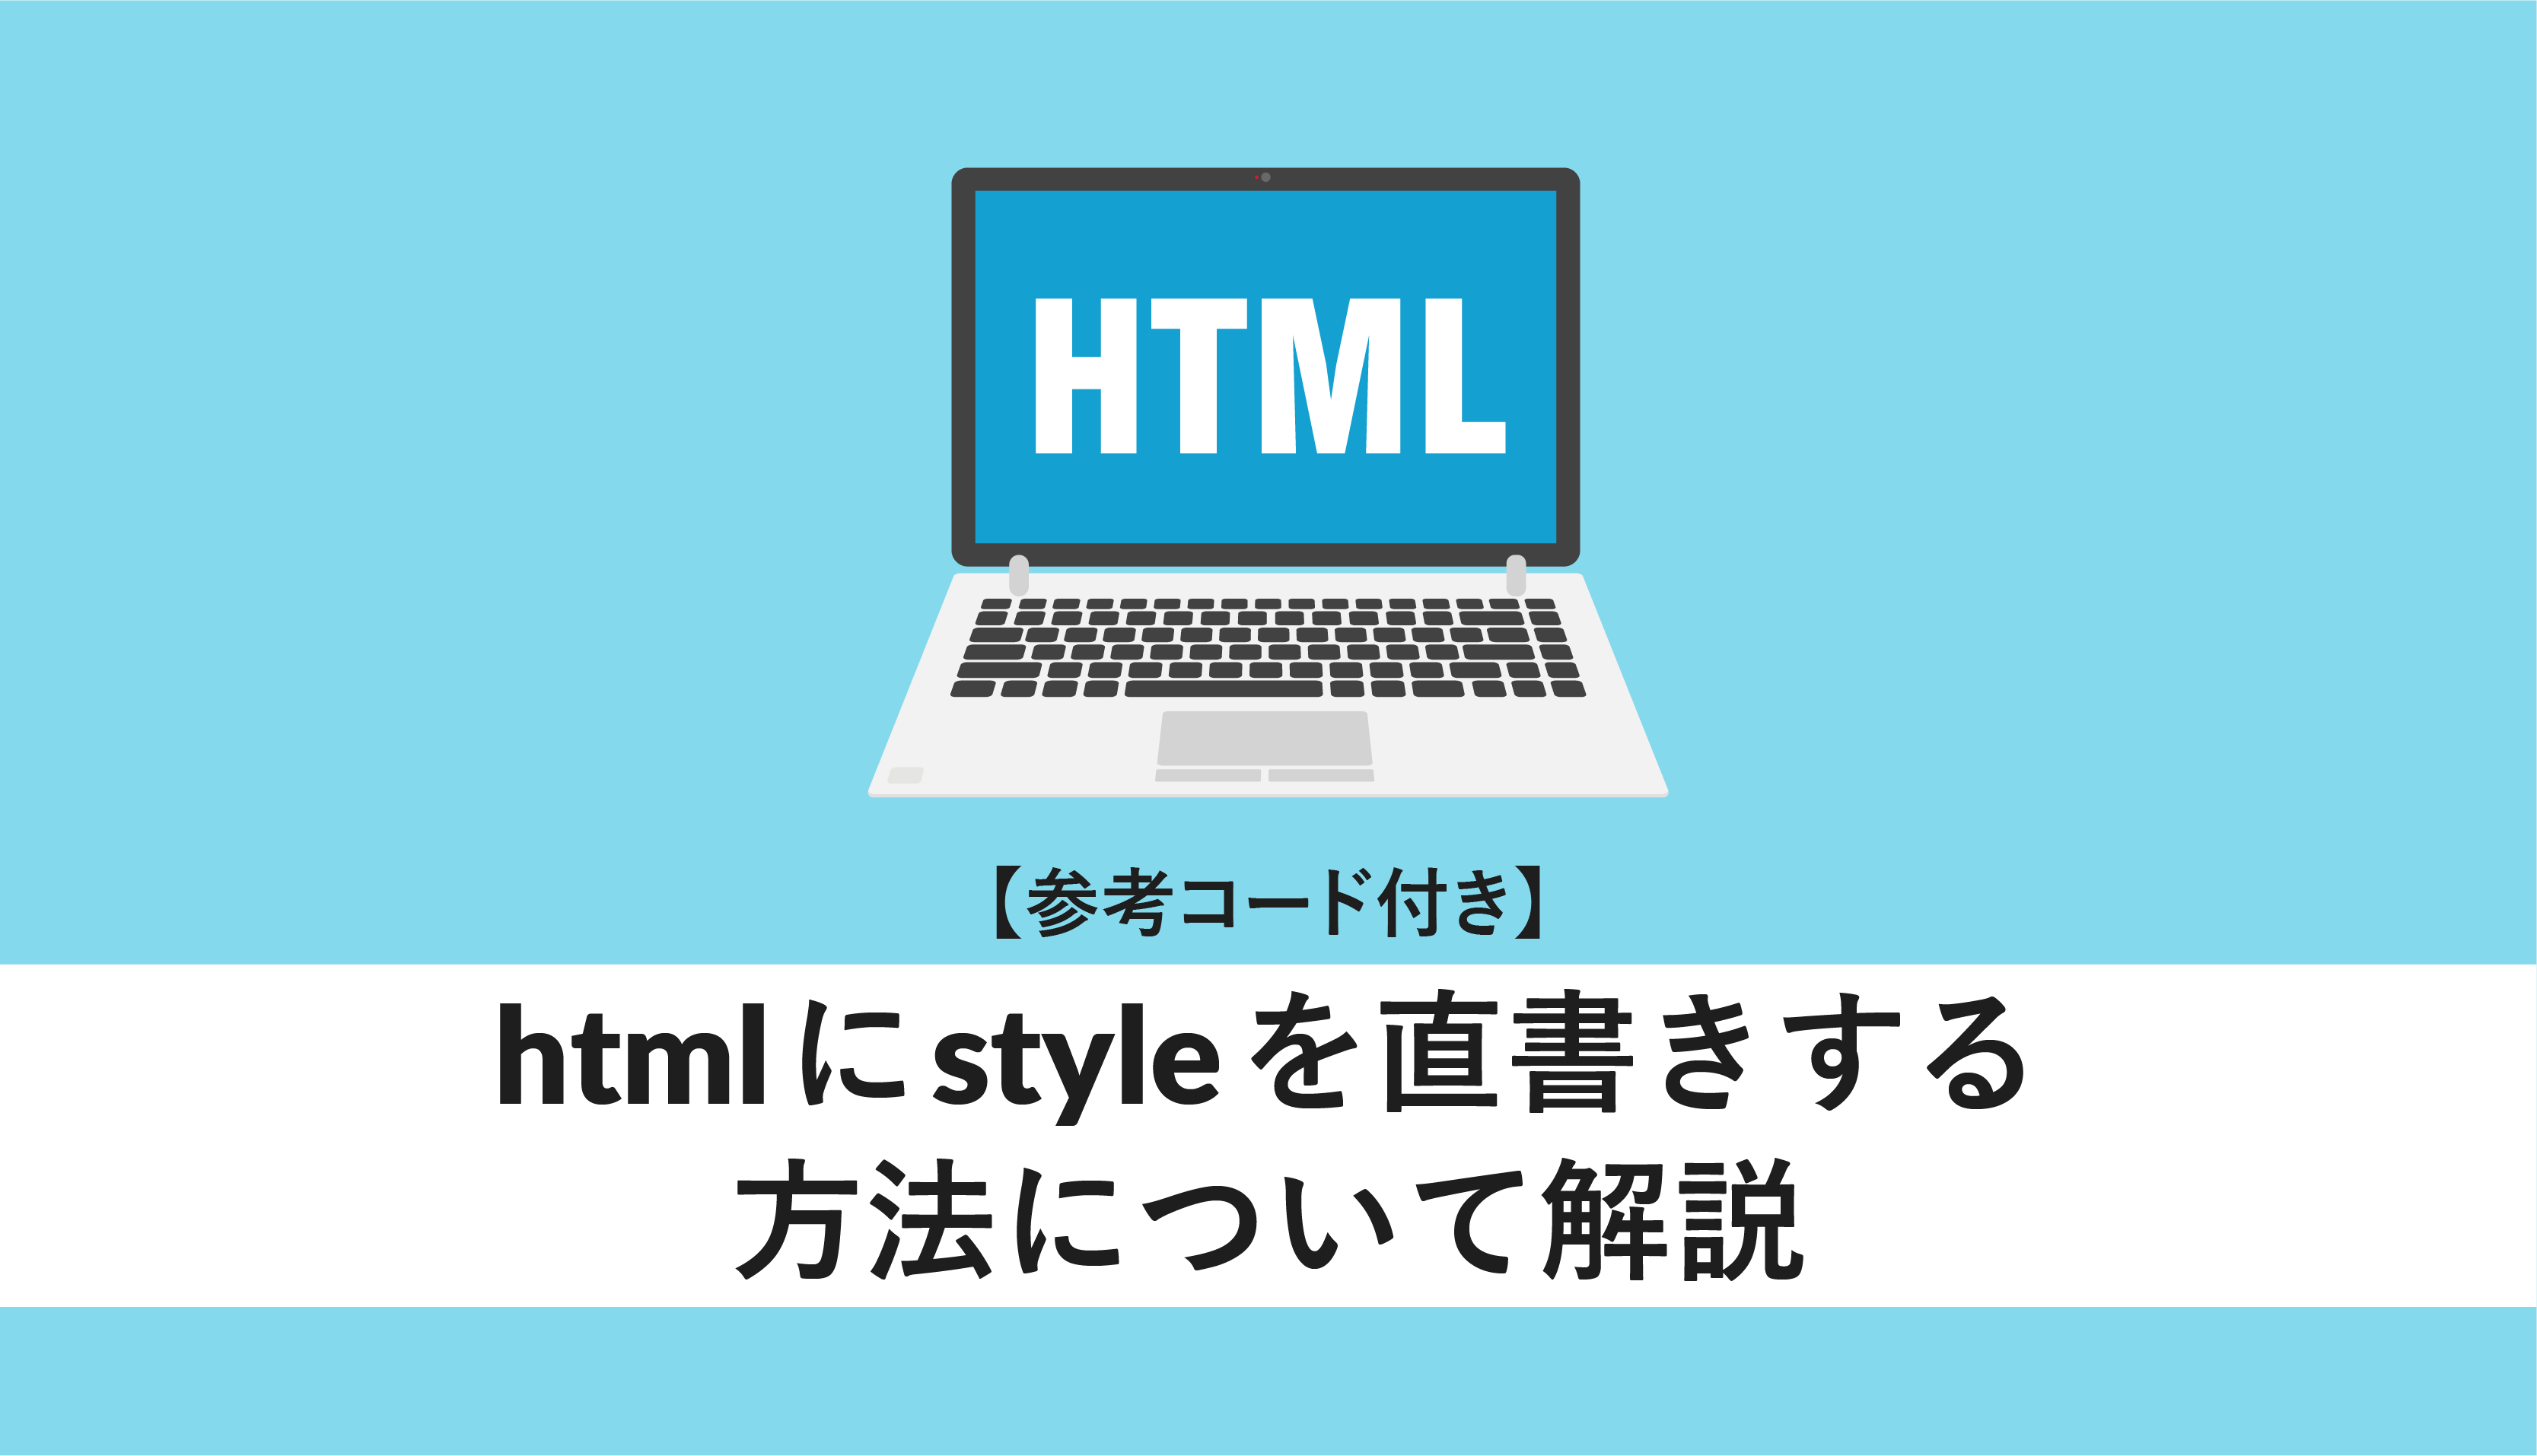 htmlにstyleを直書きする方法について解説